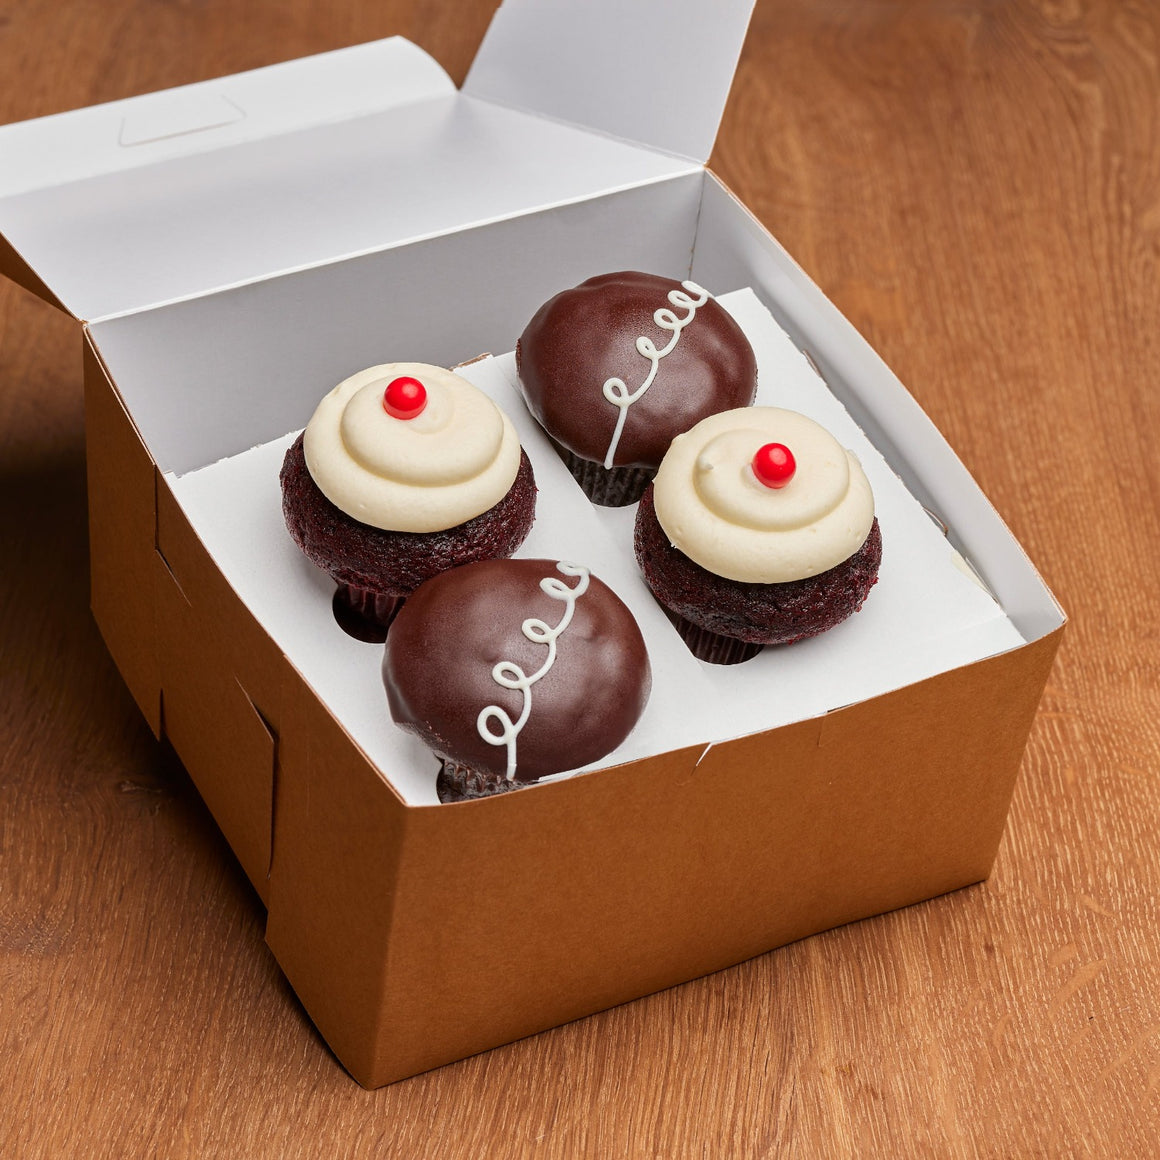 Chocoholic Cupcake Box from Noe Valley Bakery